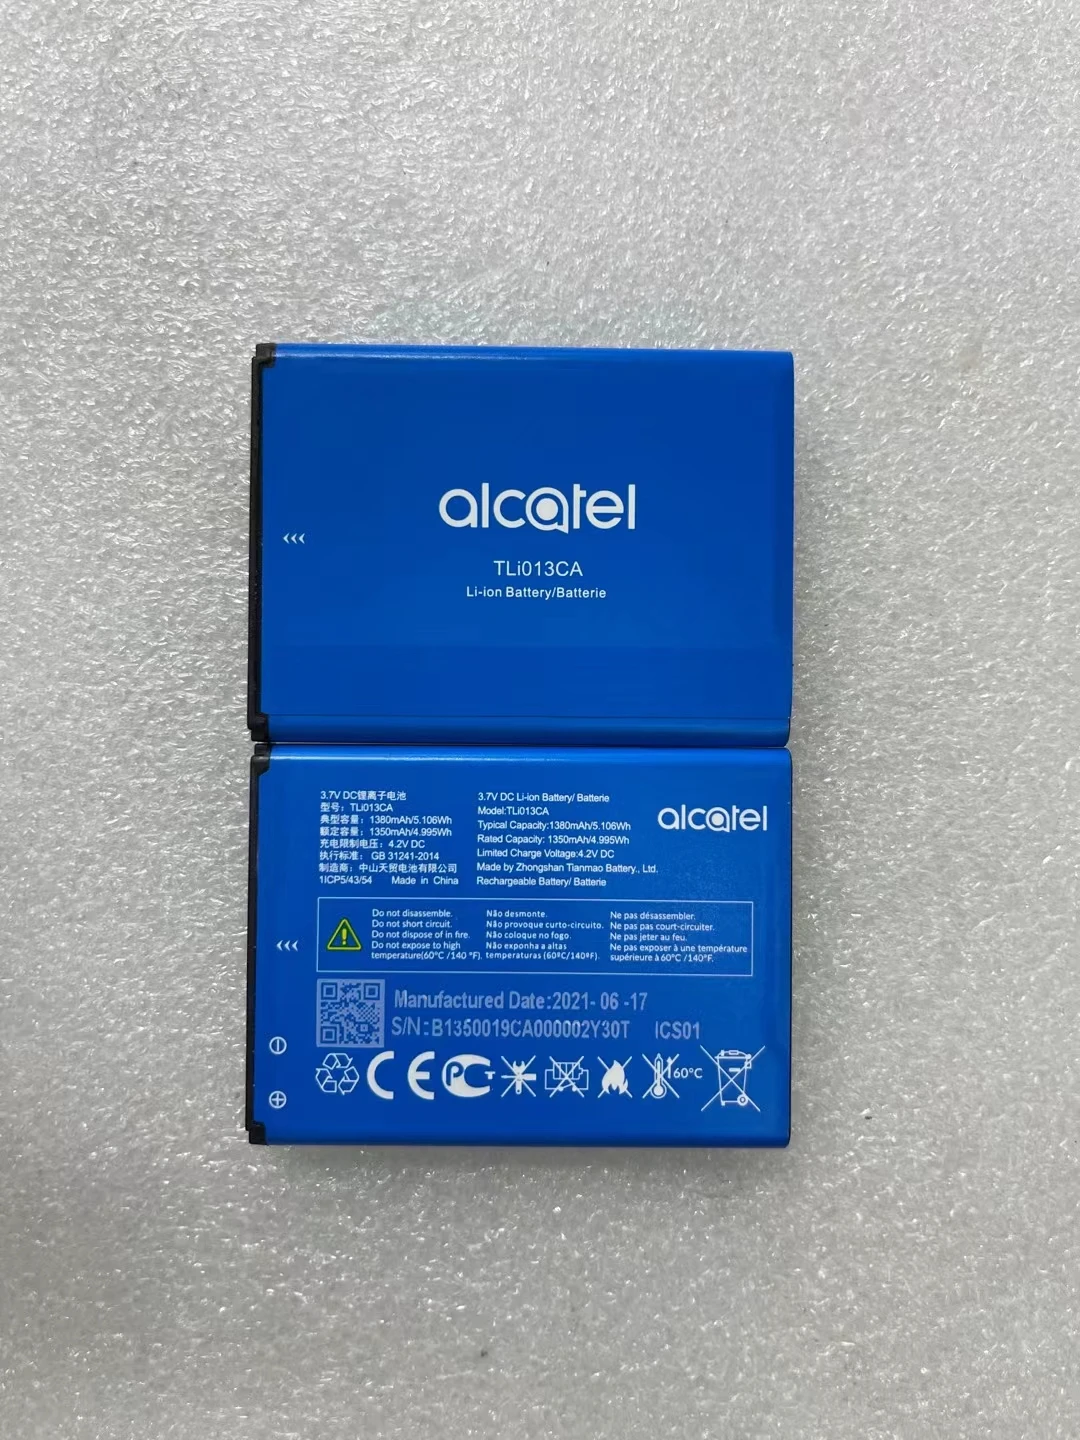 

Replacement Battery TLI013ca 1380mAh for ALCATEL TLI013CA BATTERY